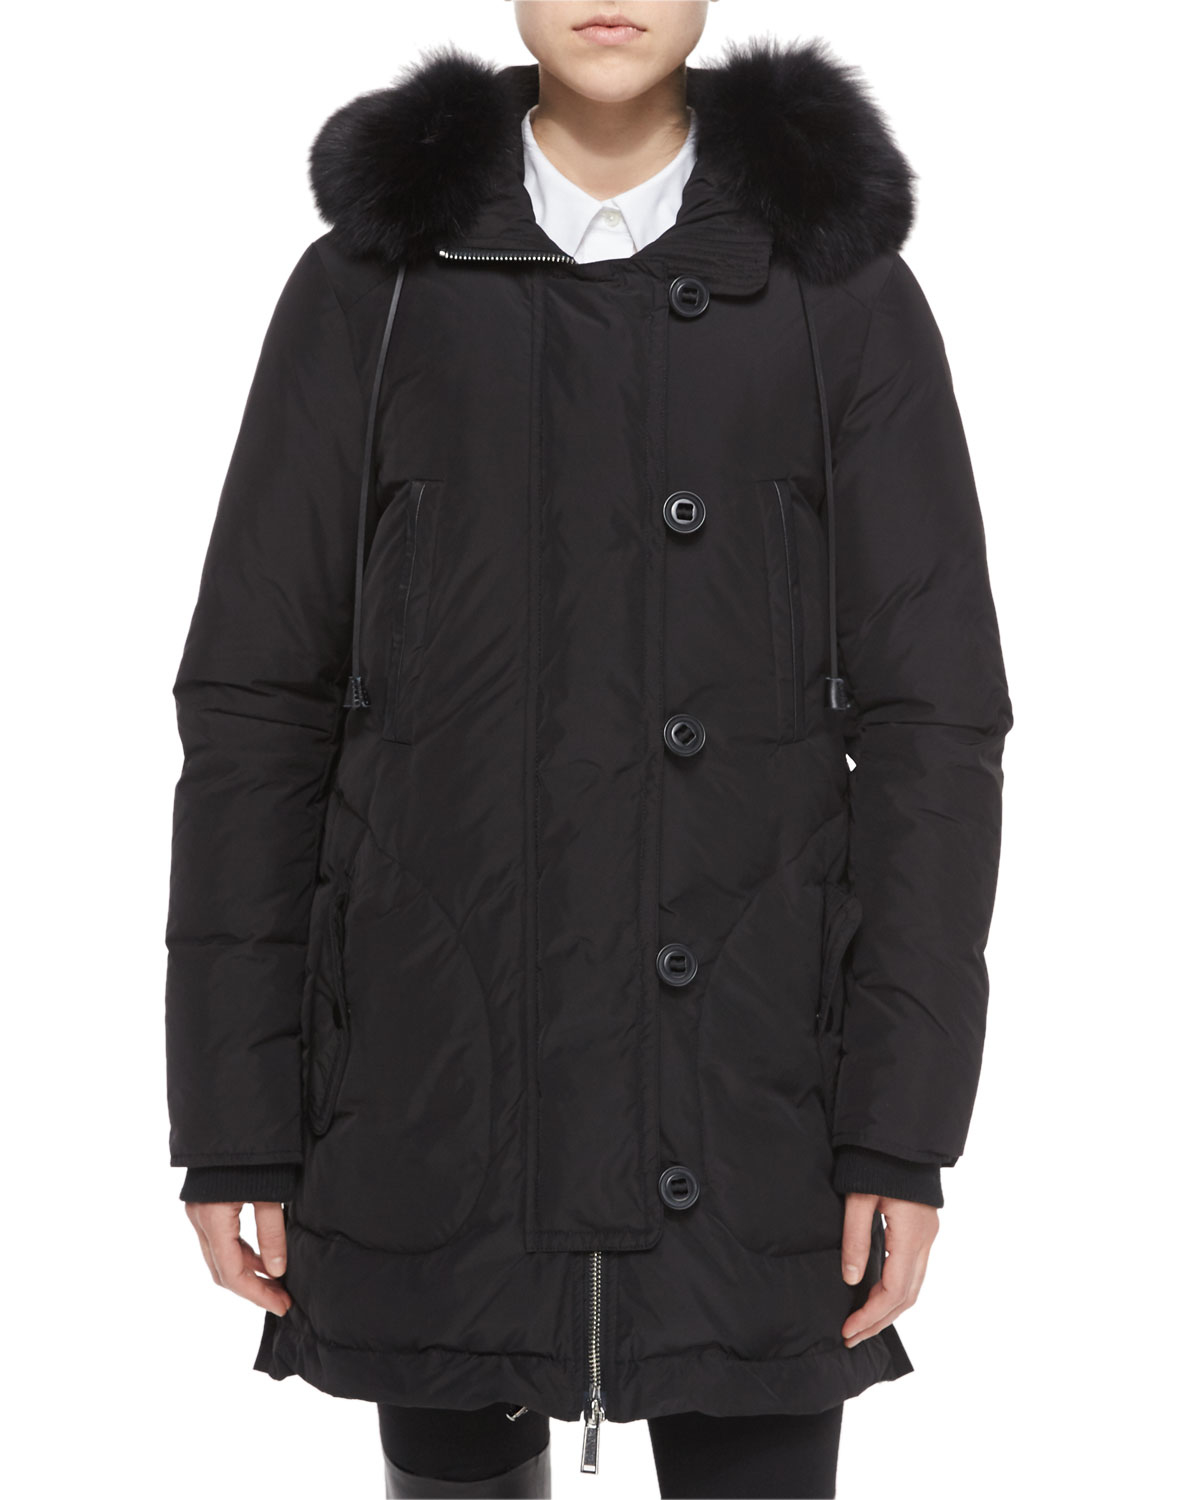 Vince Fox Fur-Trimmed Hooded Parka Jacket in Black | Lyst